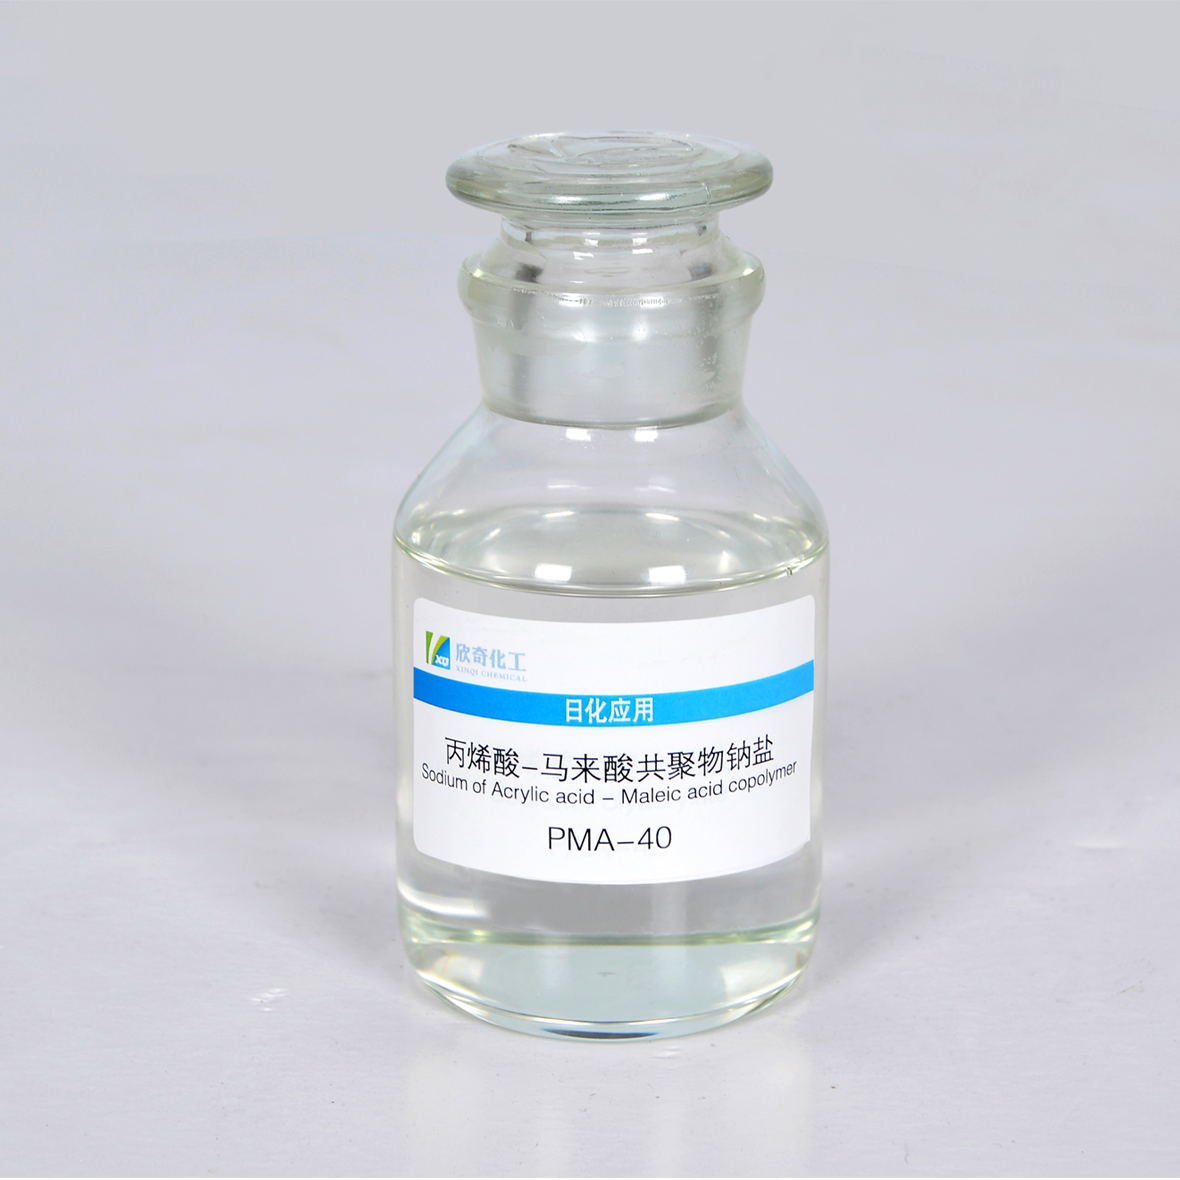 Acrylic acid-maleic acid copolymer sodium salt PMA- 40